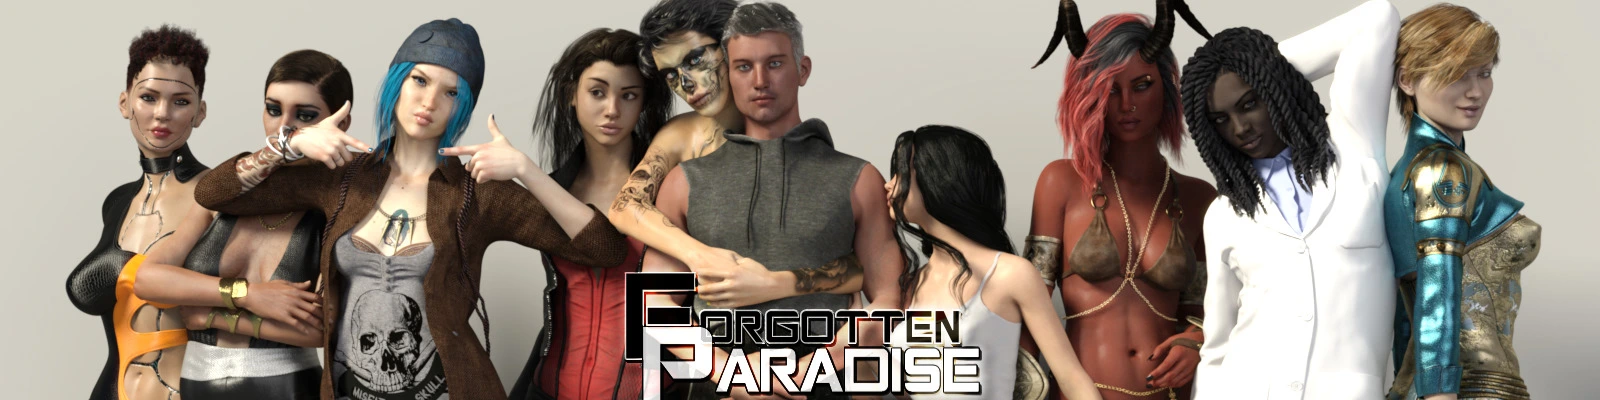 Forgotten Paradise [v1.0] main image